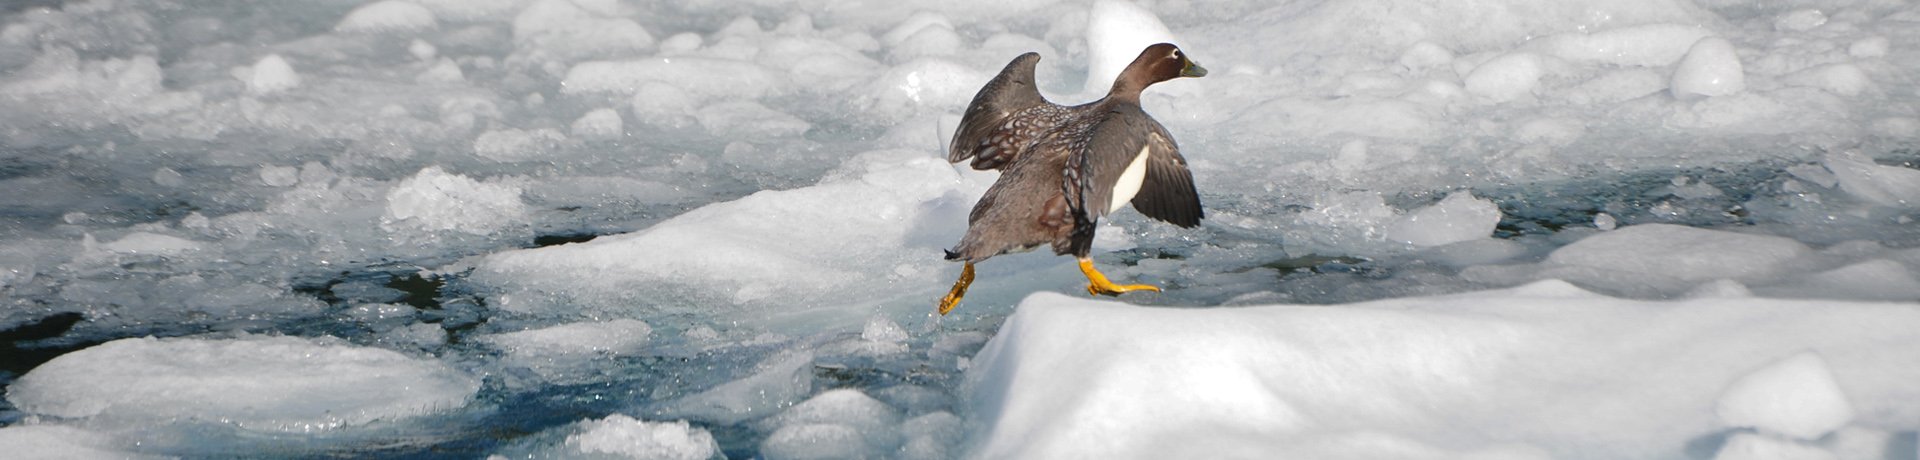 Bird on the ice, Patagonia